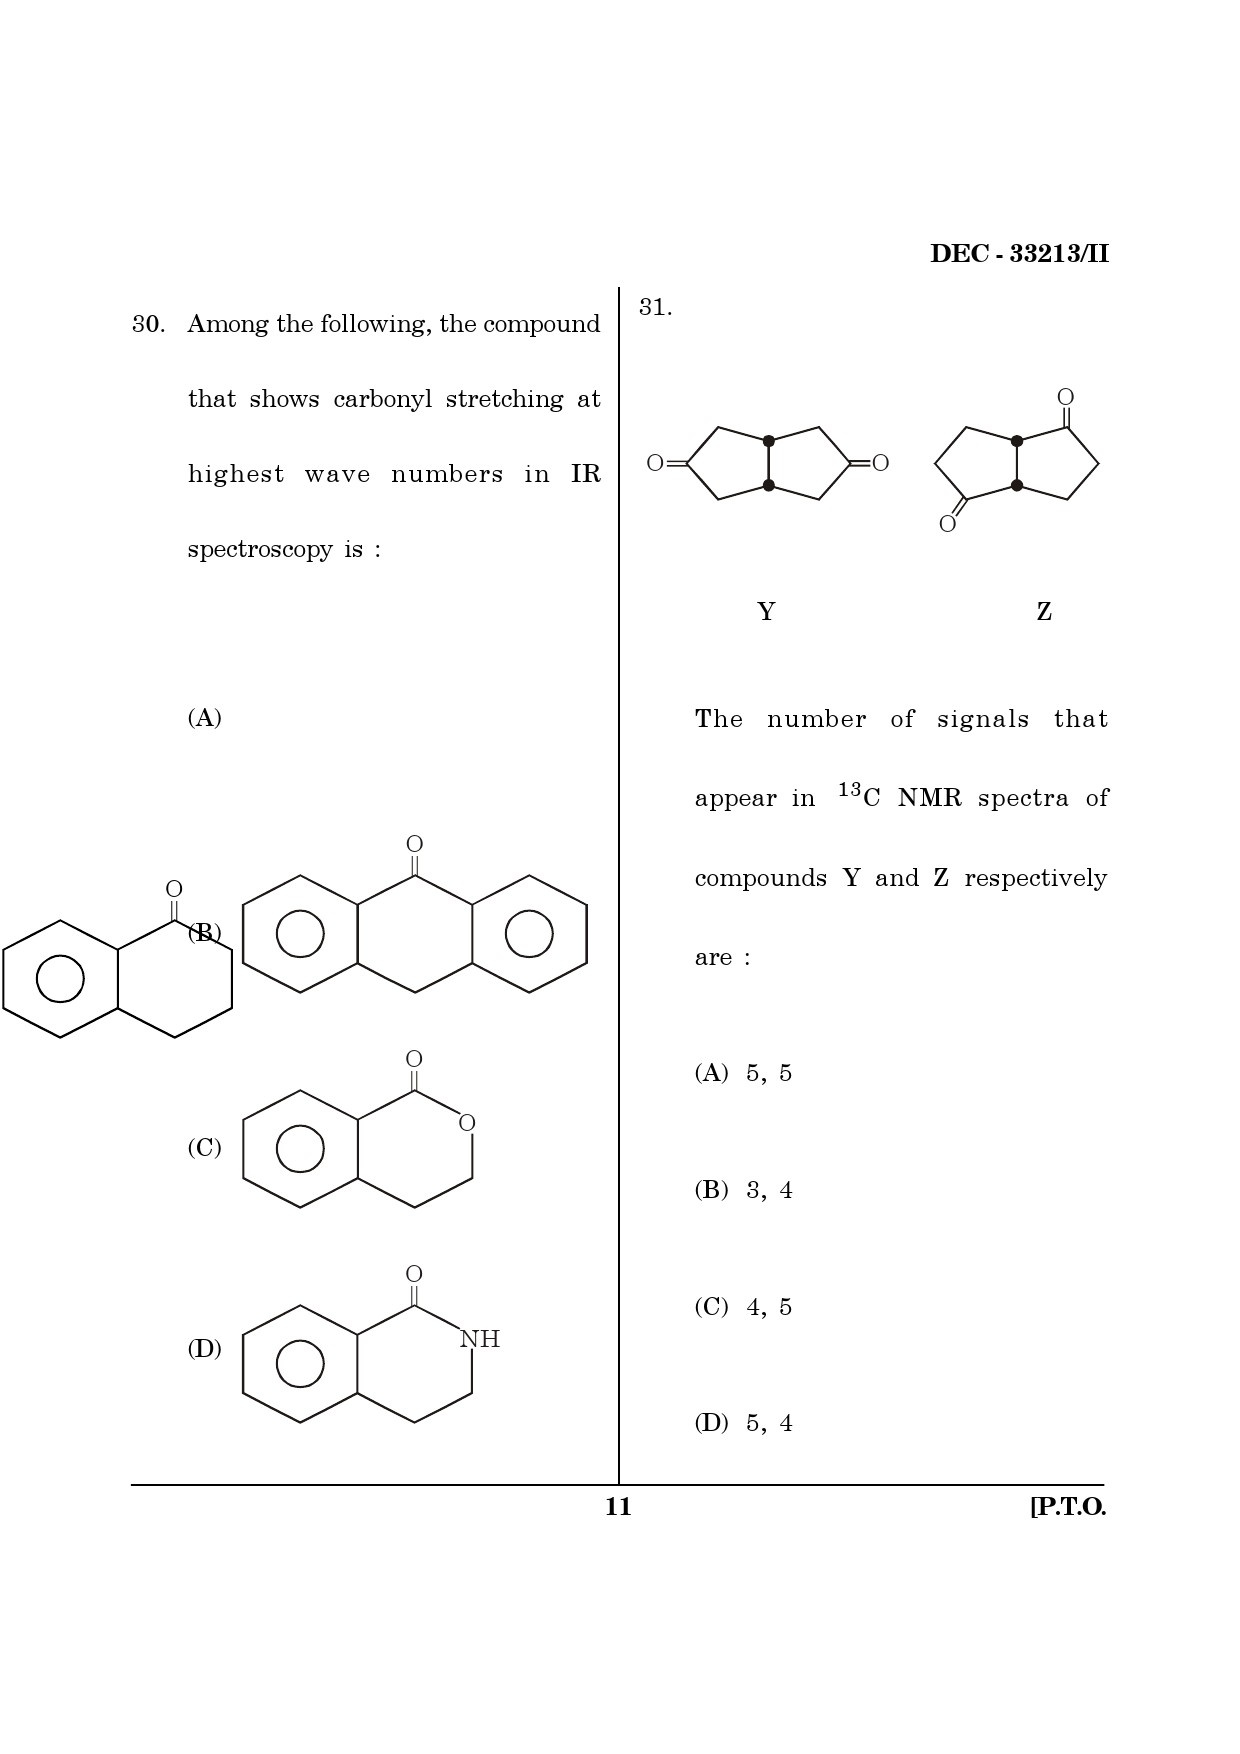 Maharashtra SET Chemical Sciences Question Paper II December 2013 10